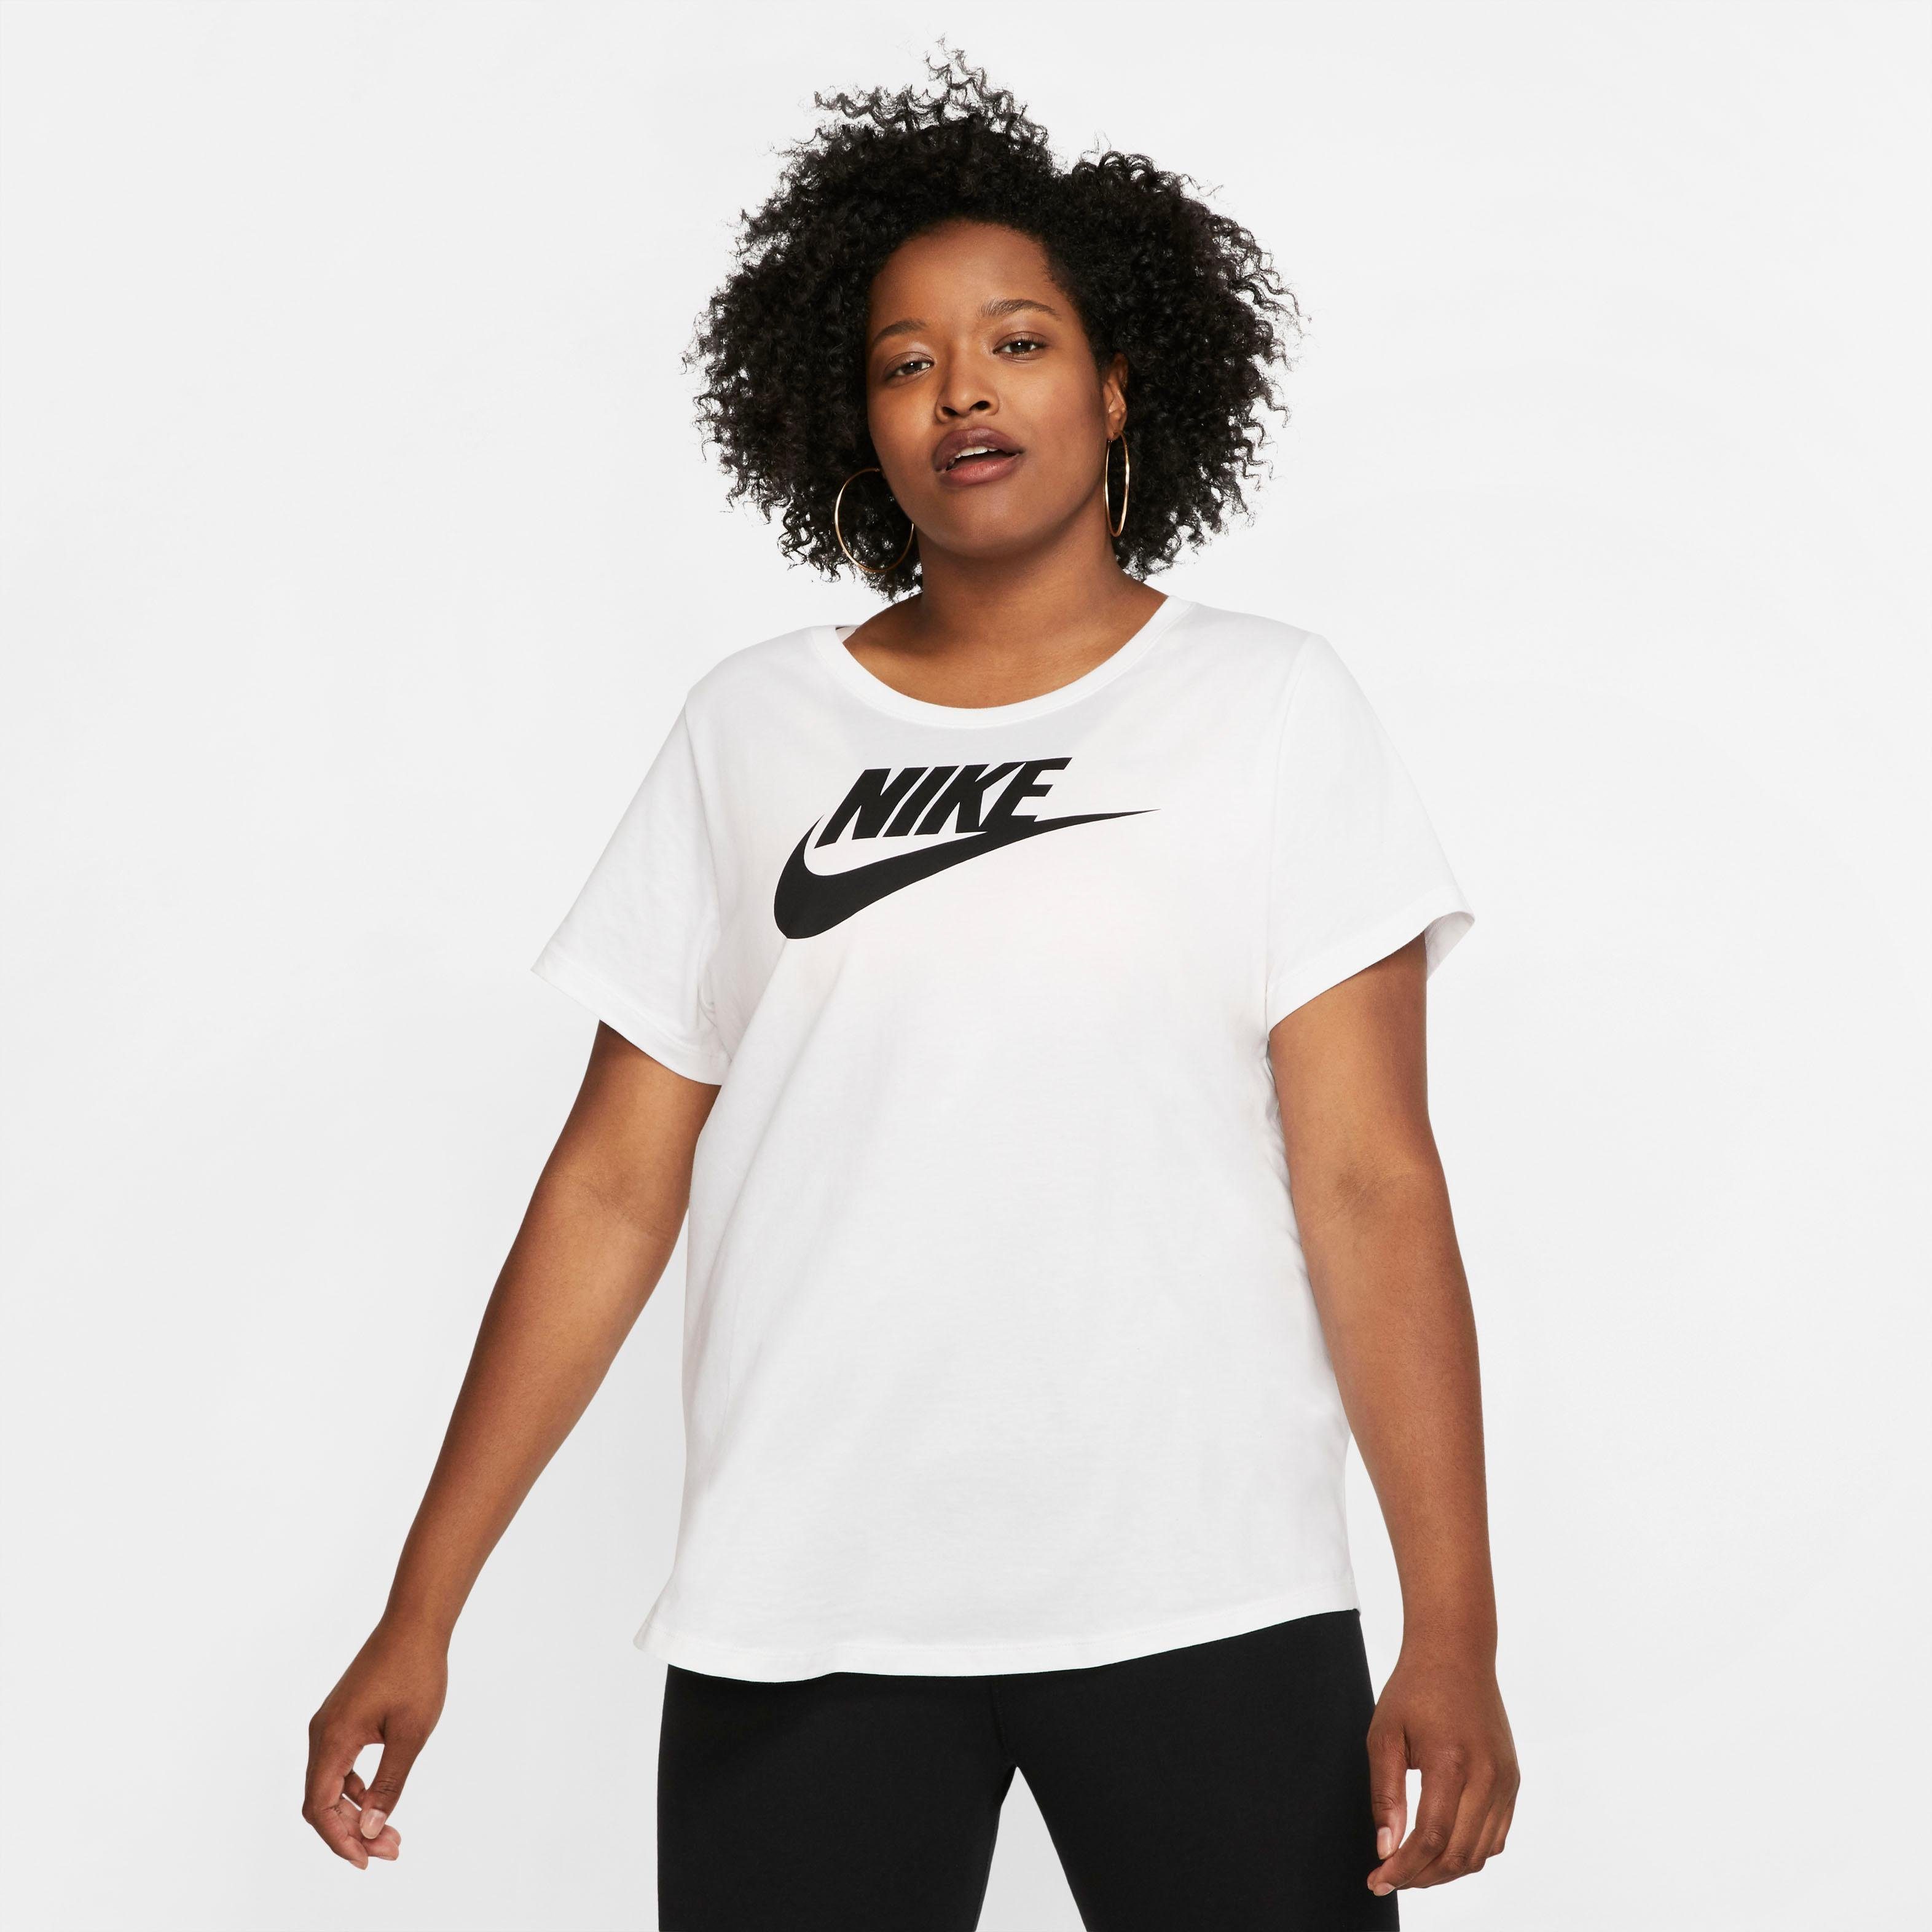 Nike Sportswear T-Shirt online kaufen | OTTO